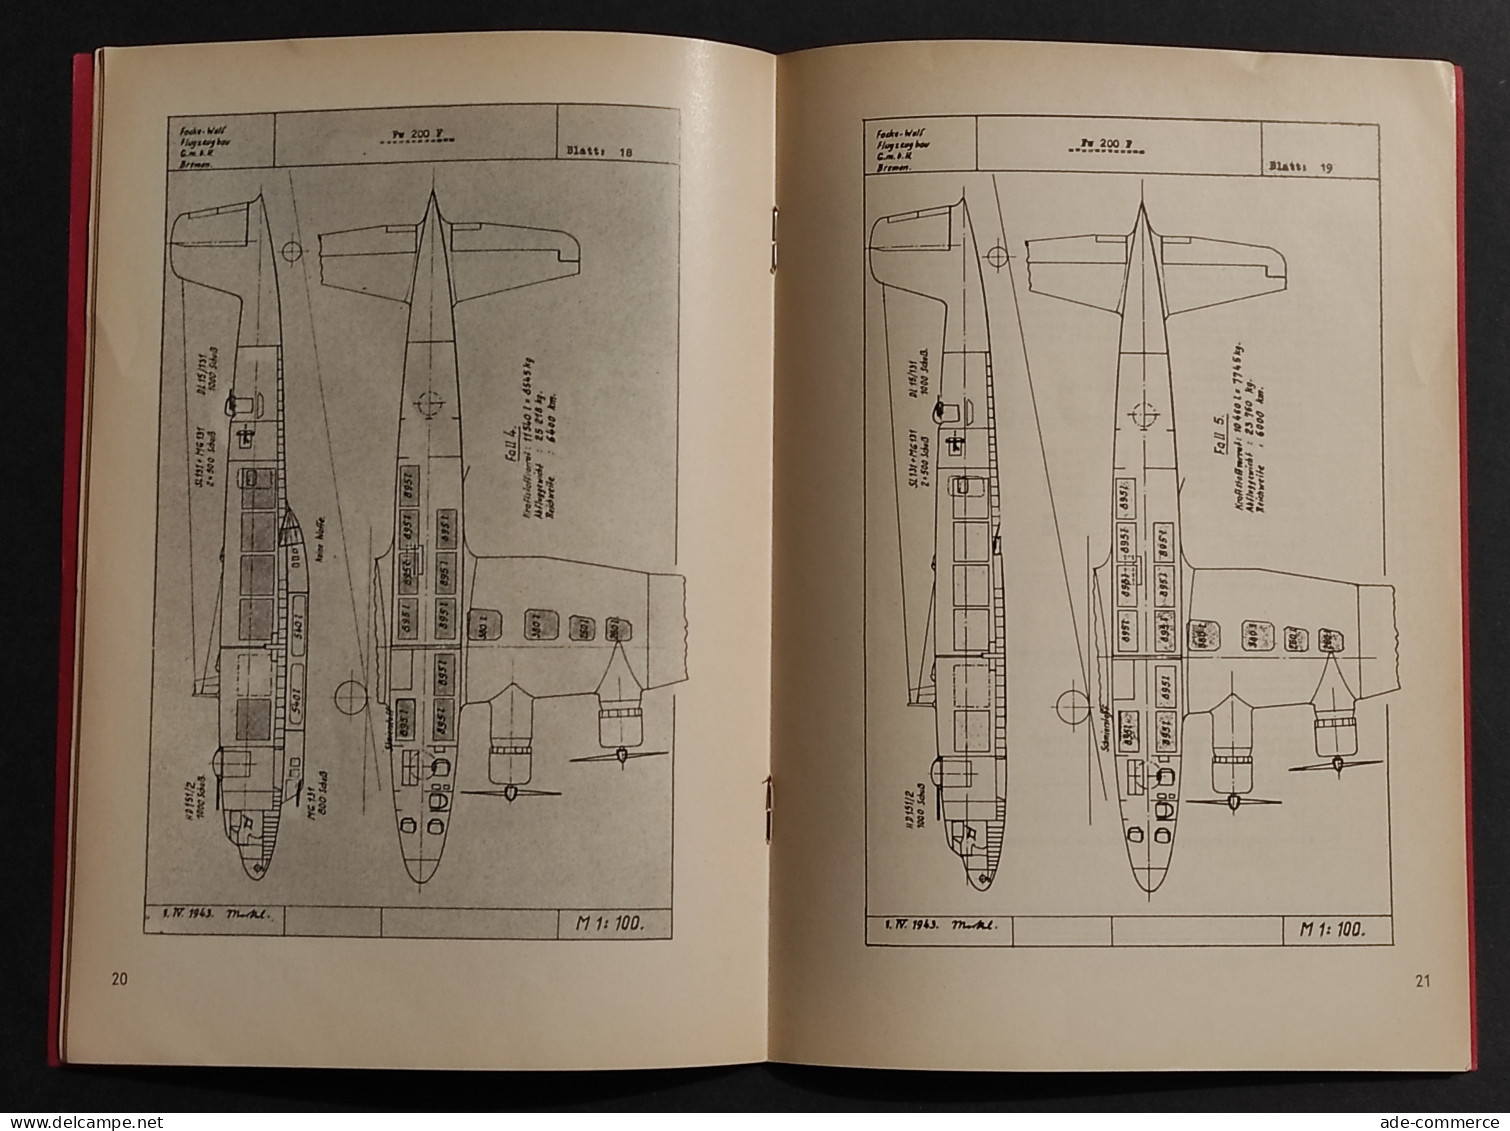 Beschreibung Focke-Wulf Fw 200 F - Luftfarth Dokumente LD9 - Engines